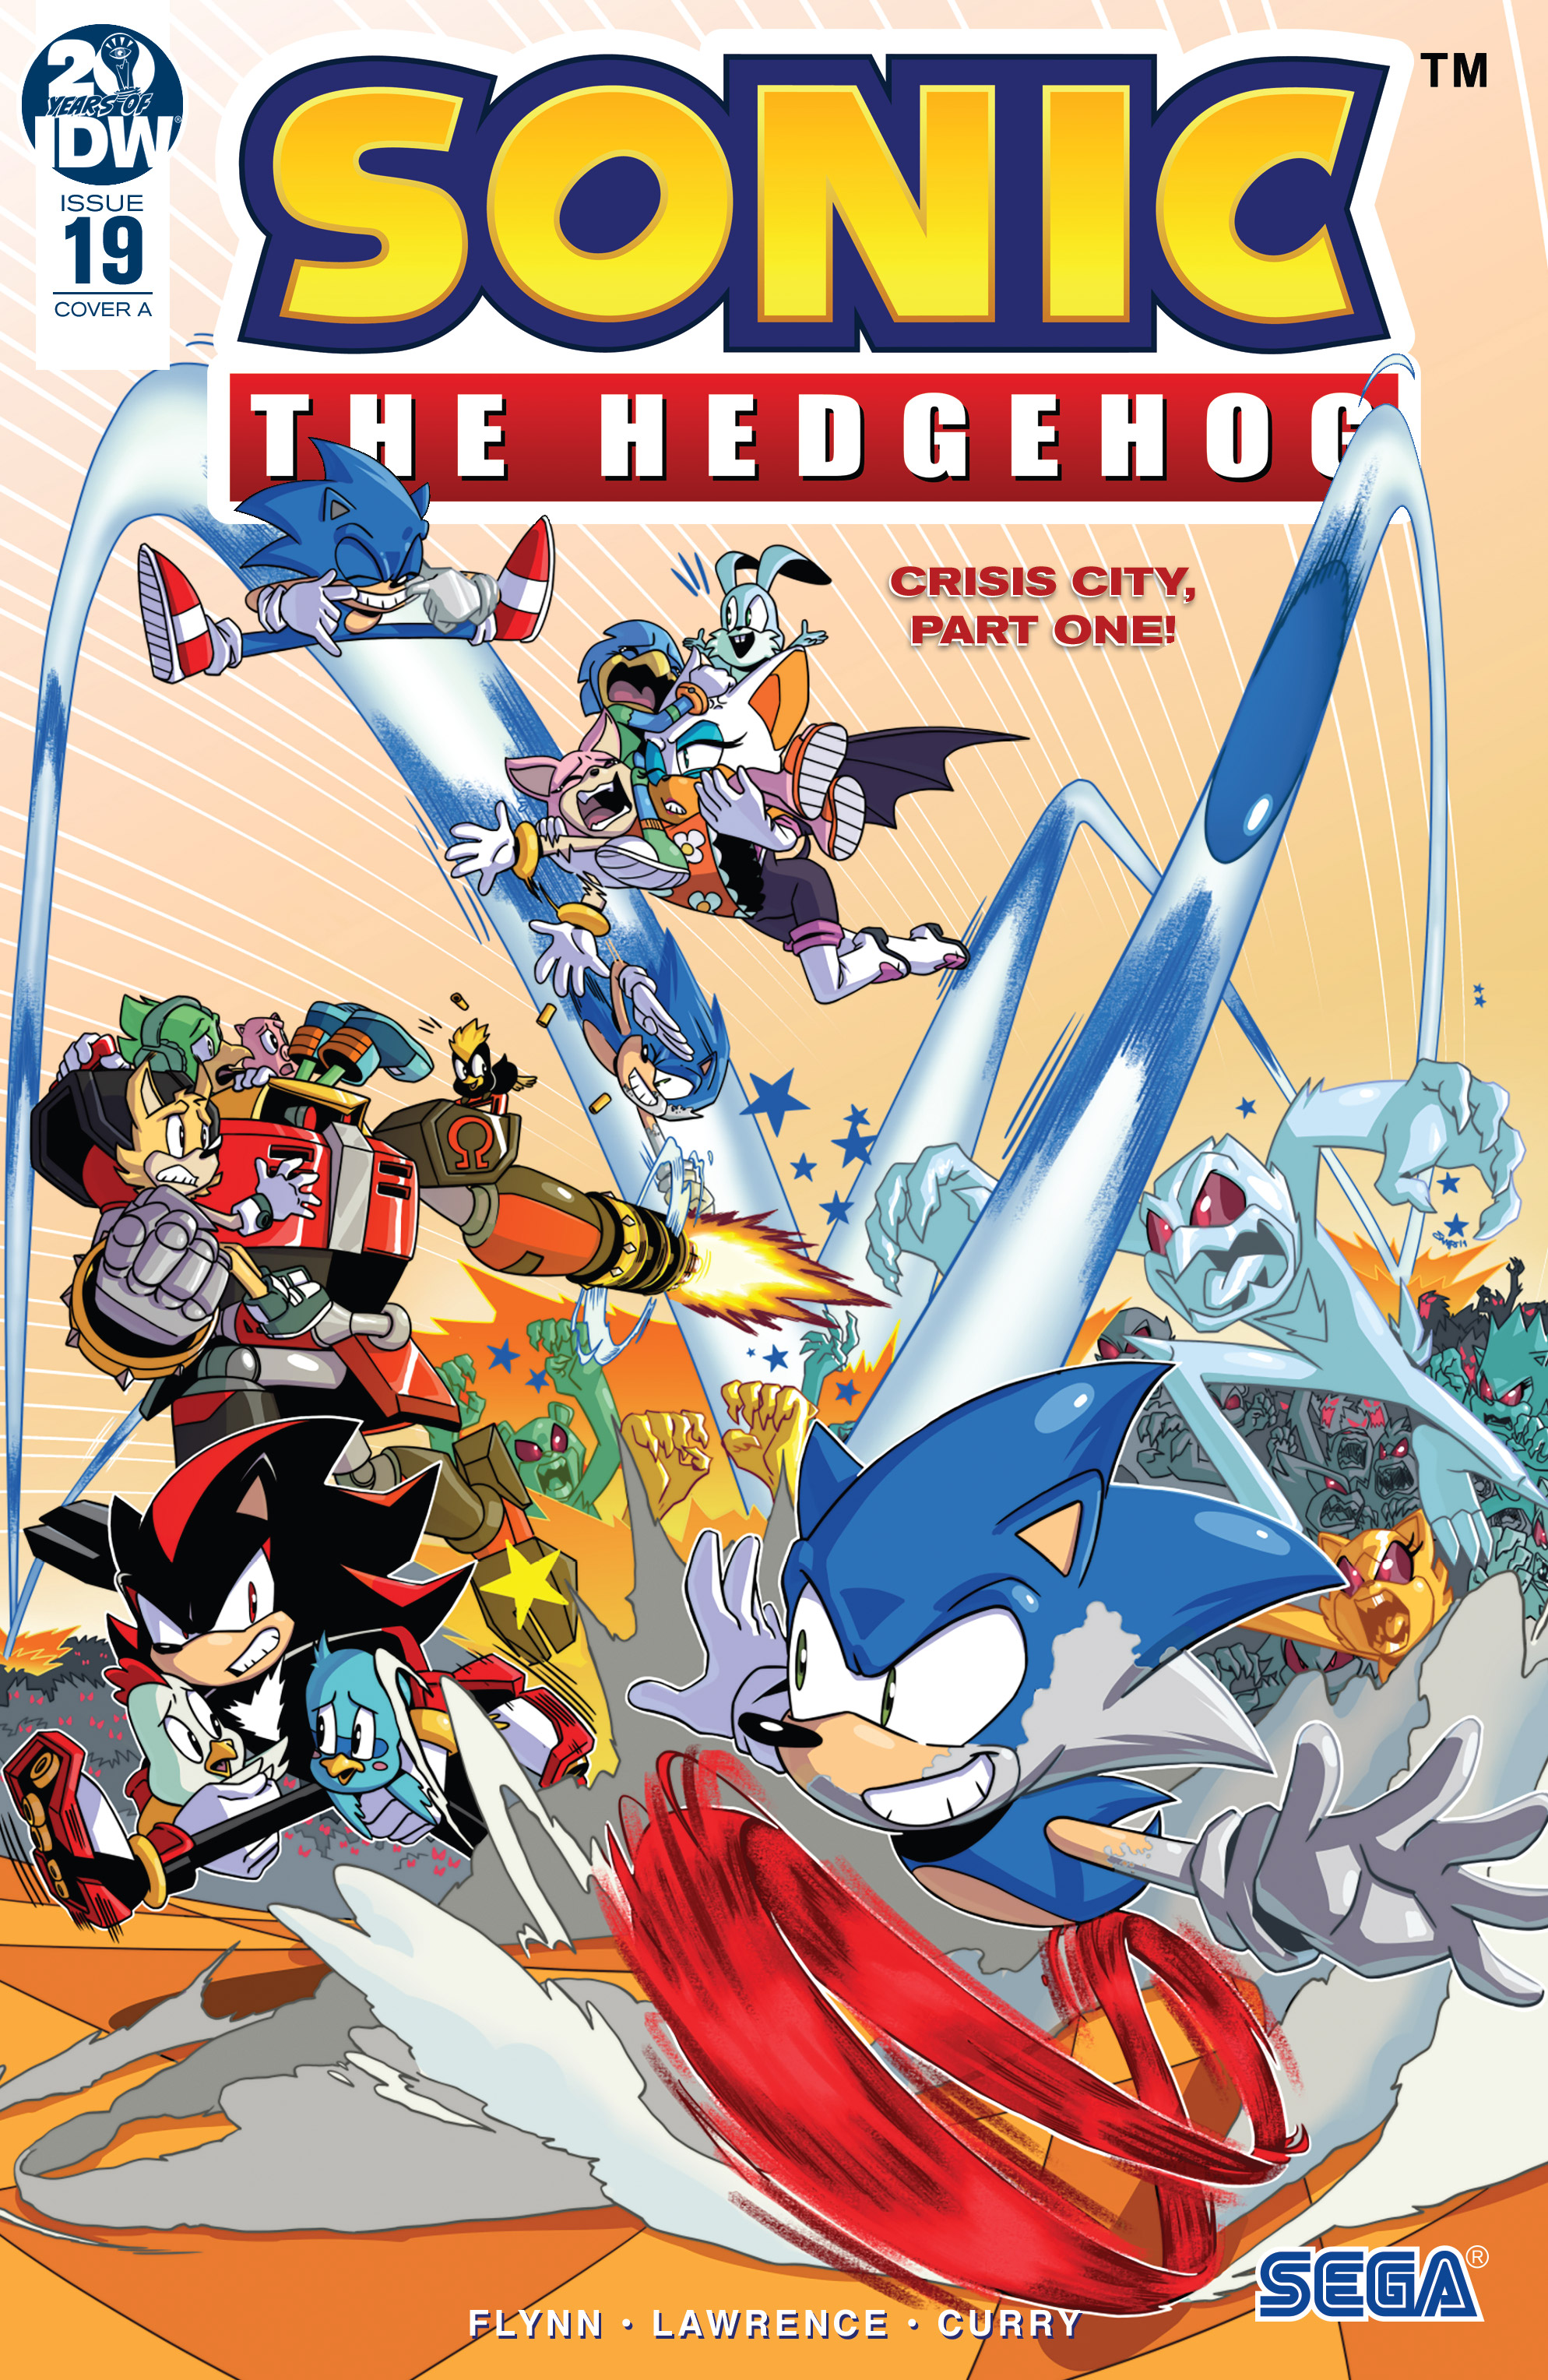 Sonic The Hedgehog IDW (#1-67) - Read Comic Online Sonic the Hedgehog #57